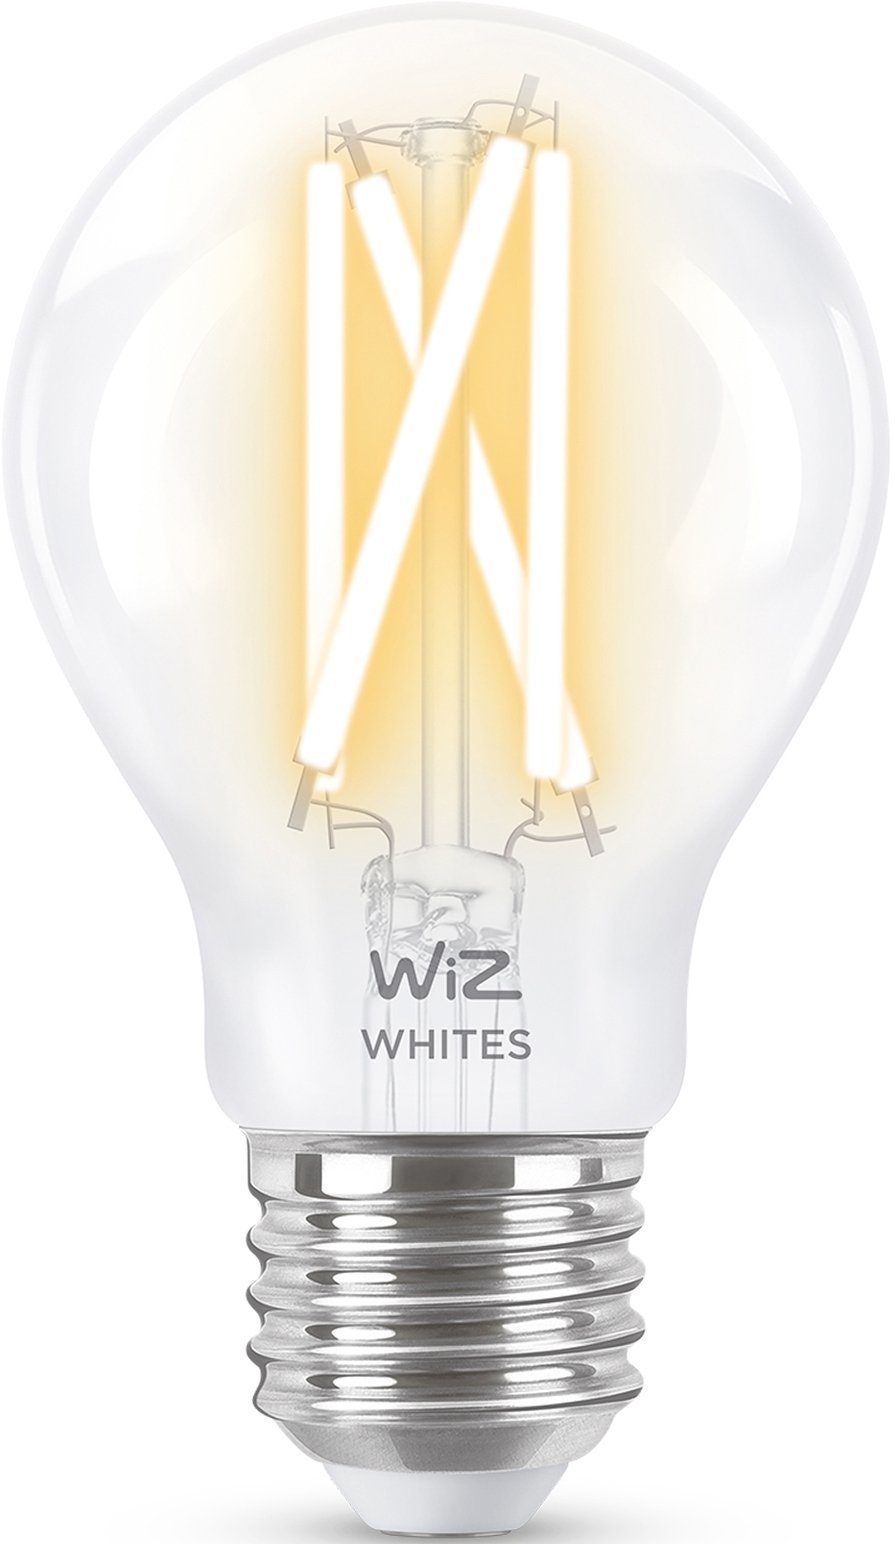 WiZ LED-Filament Filament 60W E27 Standardform Clear Einzelpack, E27, 1 St., Warmweiß, Wiz Tunable White Filament LED Lampen für klassisches Vintage-Design